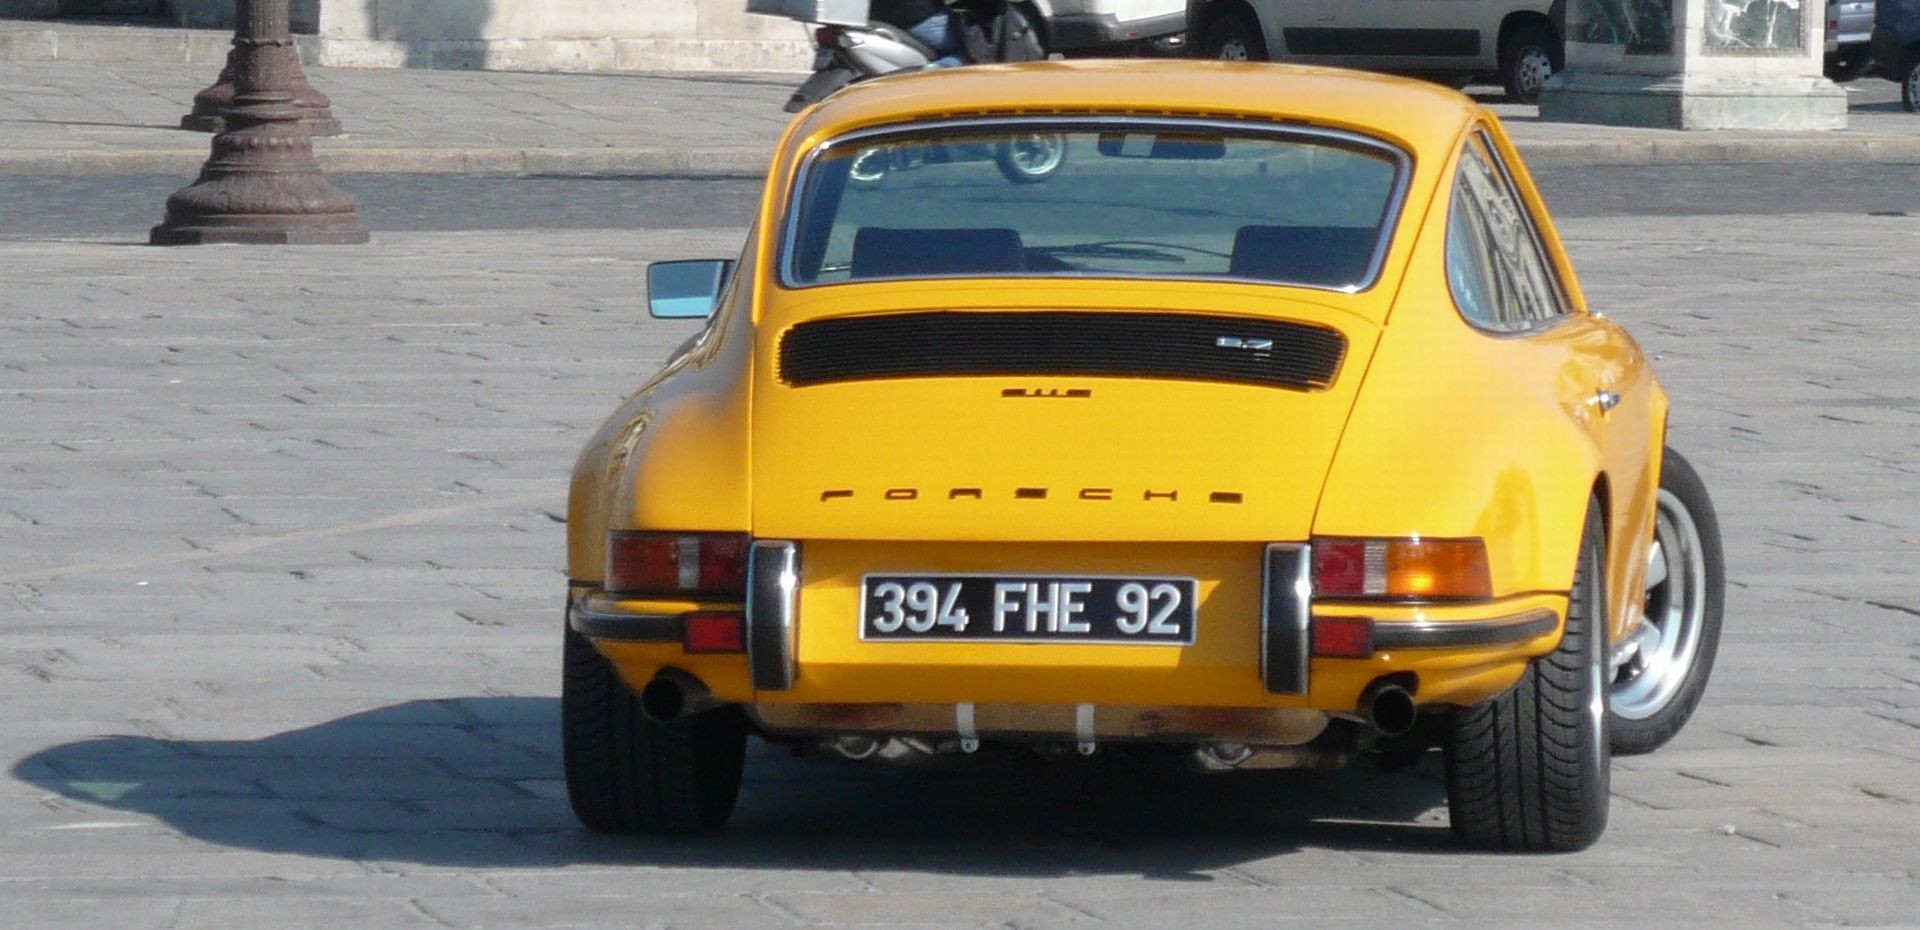 Porsche Cars Yellow